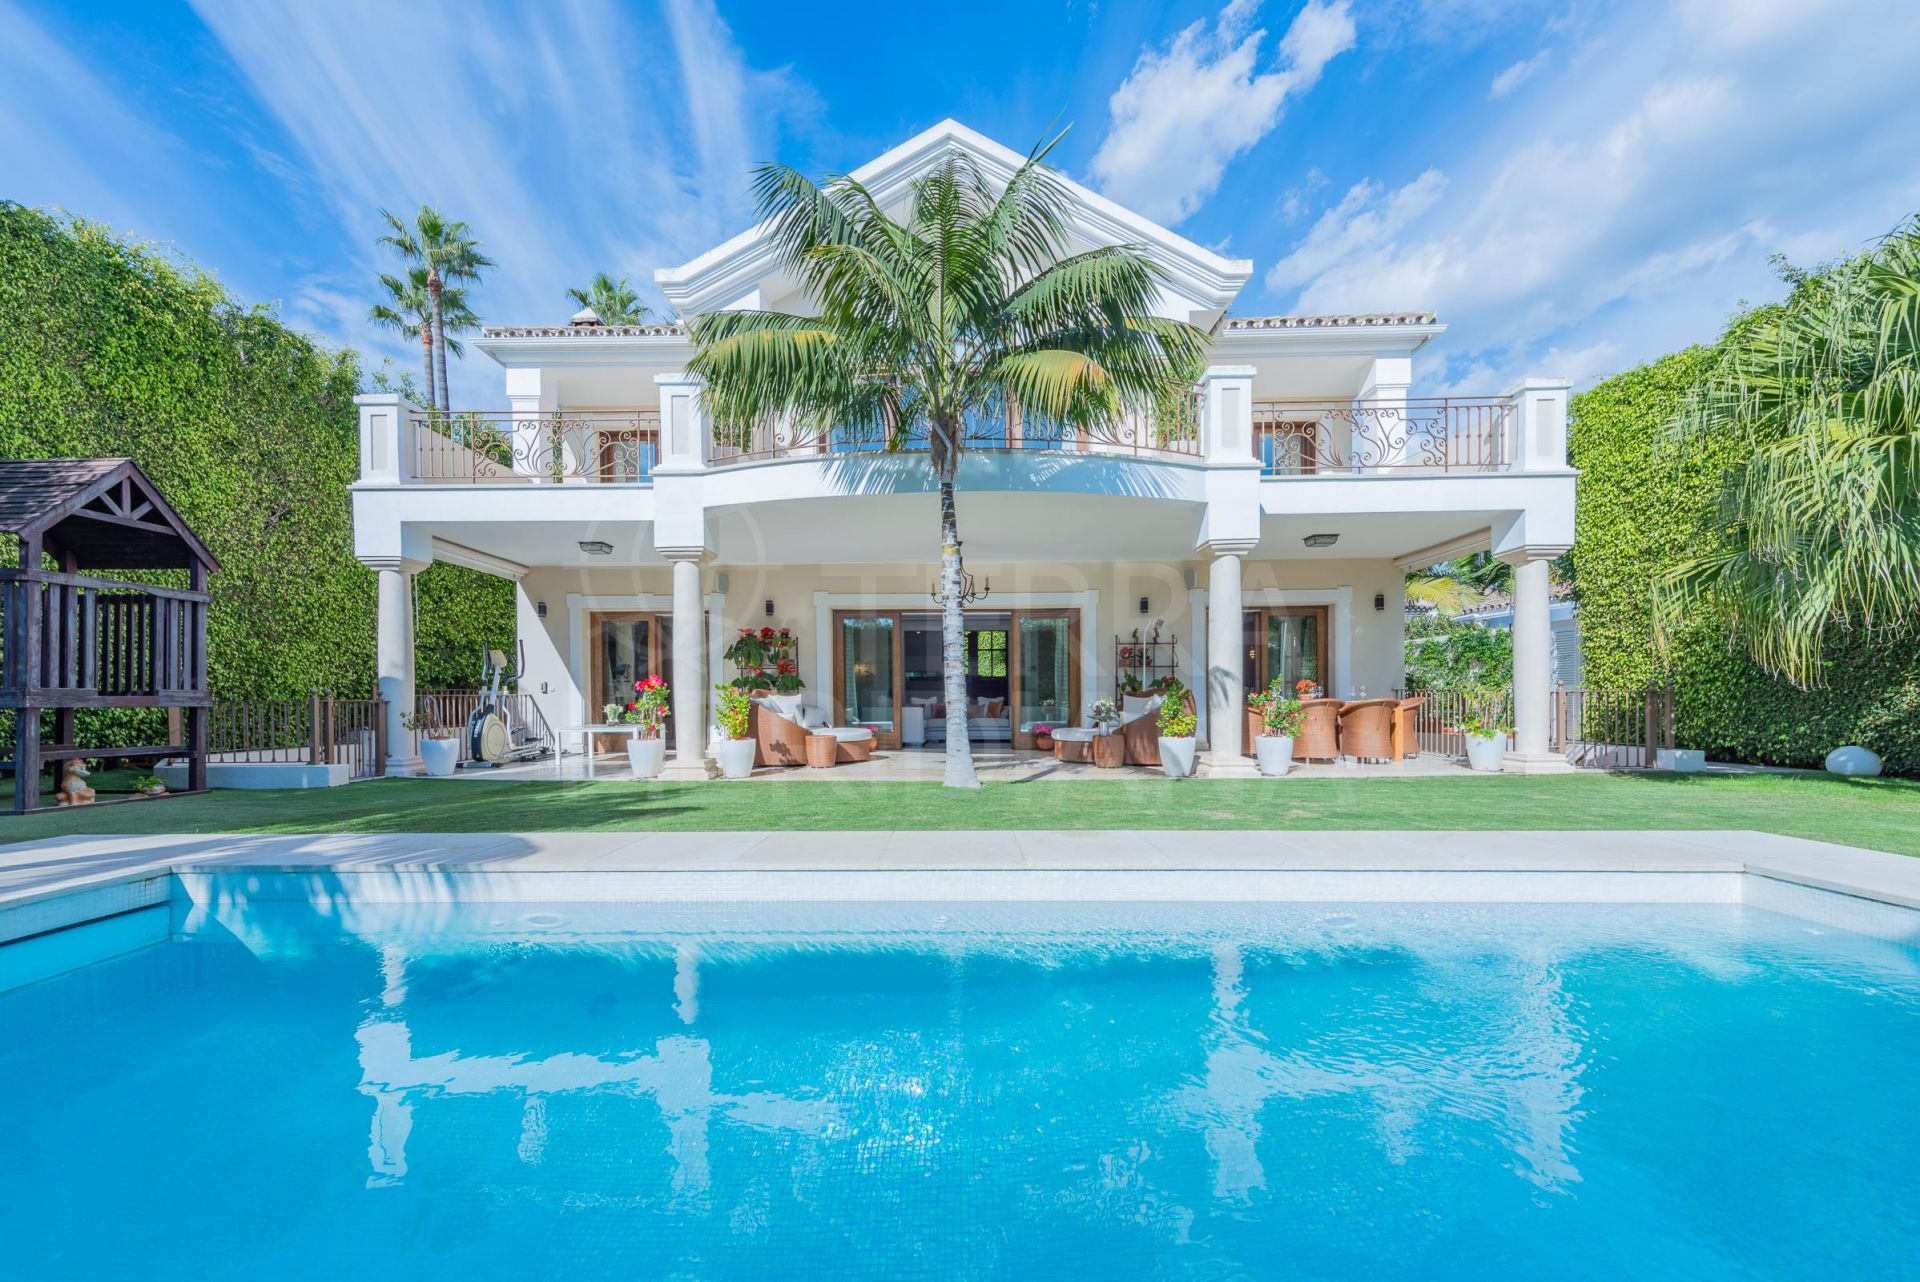  Villa  de luxe  en bord de mer  vendre   Casablanca 